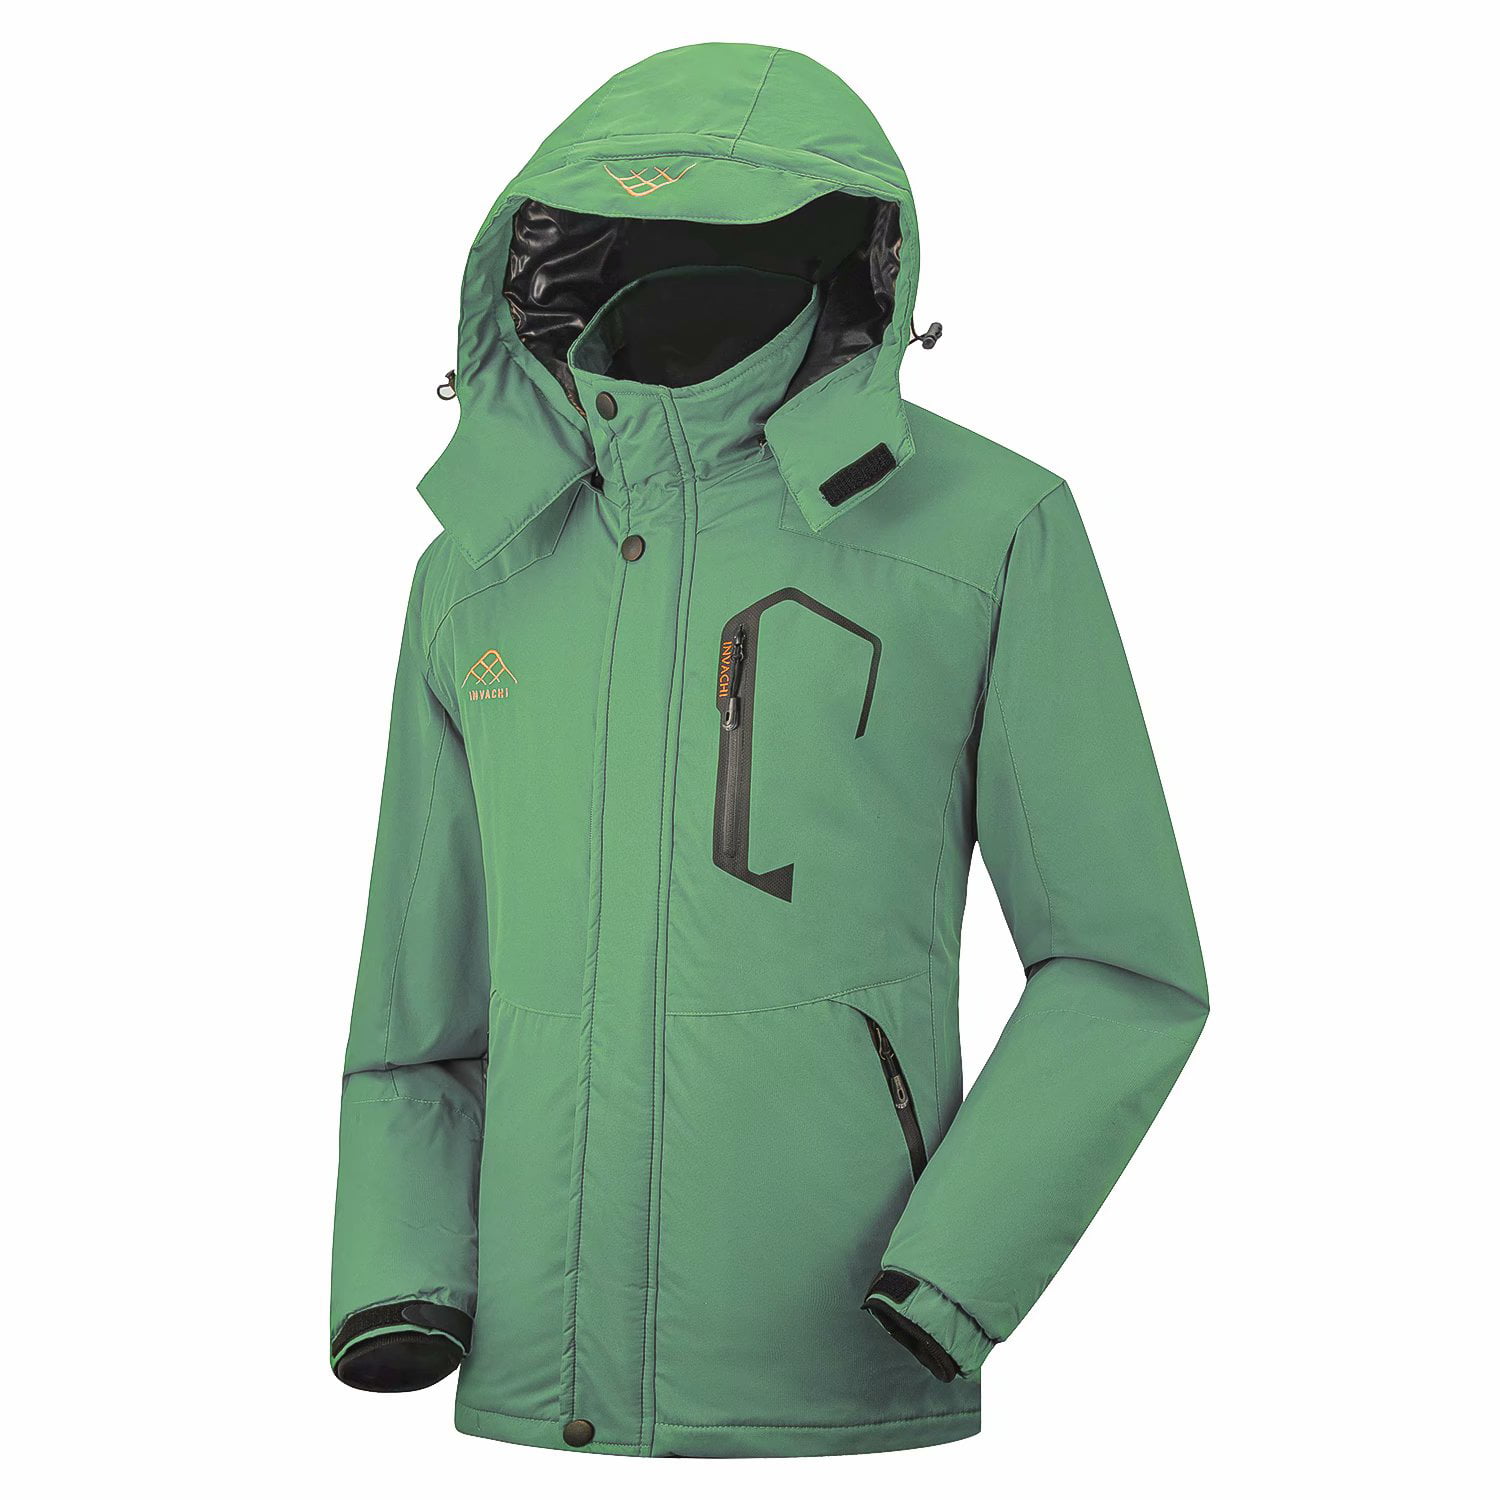 INVACHI Unisexs Lightweight Windbreaker Jacket Waterproof & Windproof Hooded Anorak Pullover Rain Jacket Packable Raincoat 